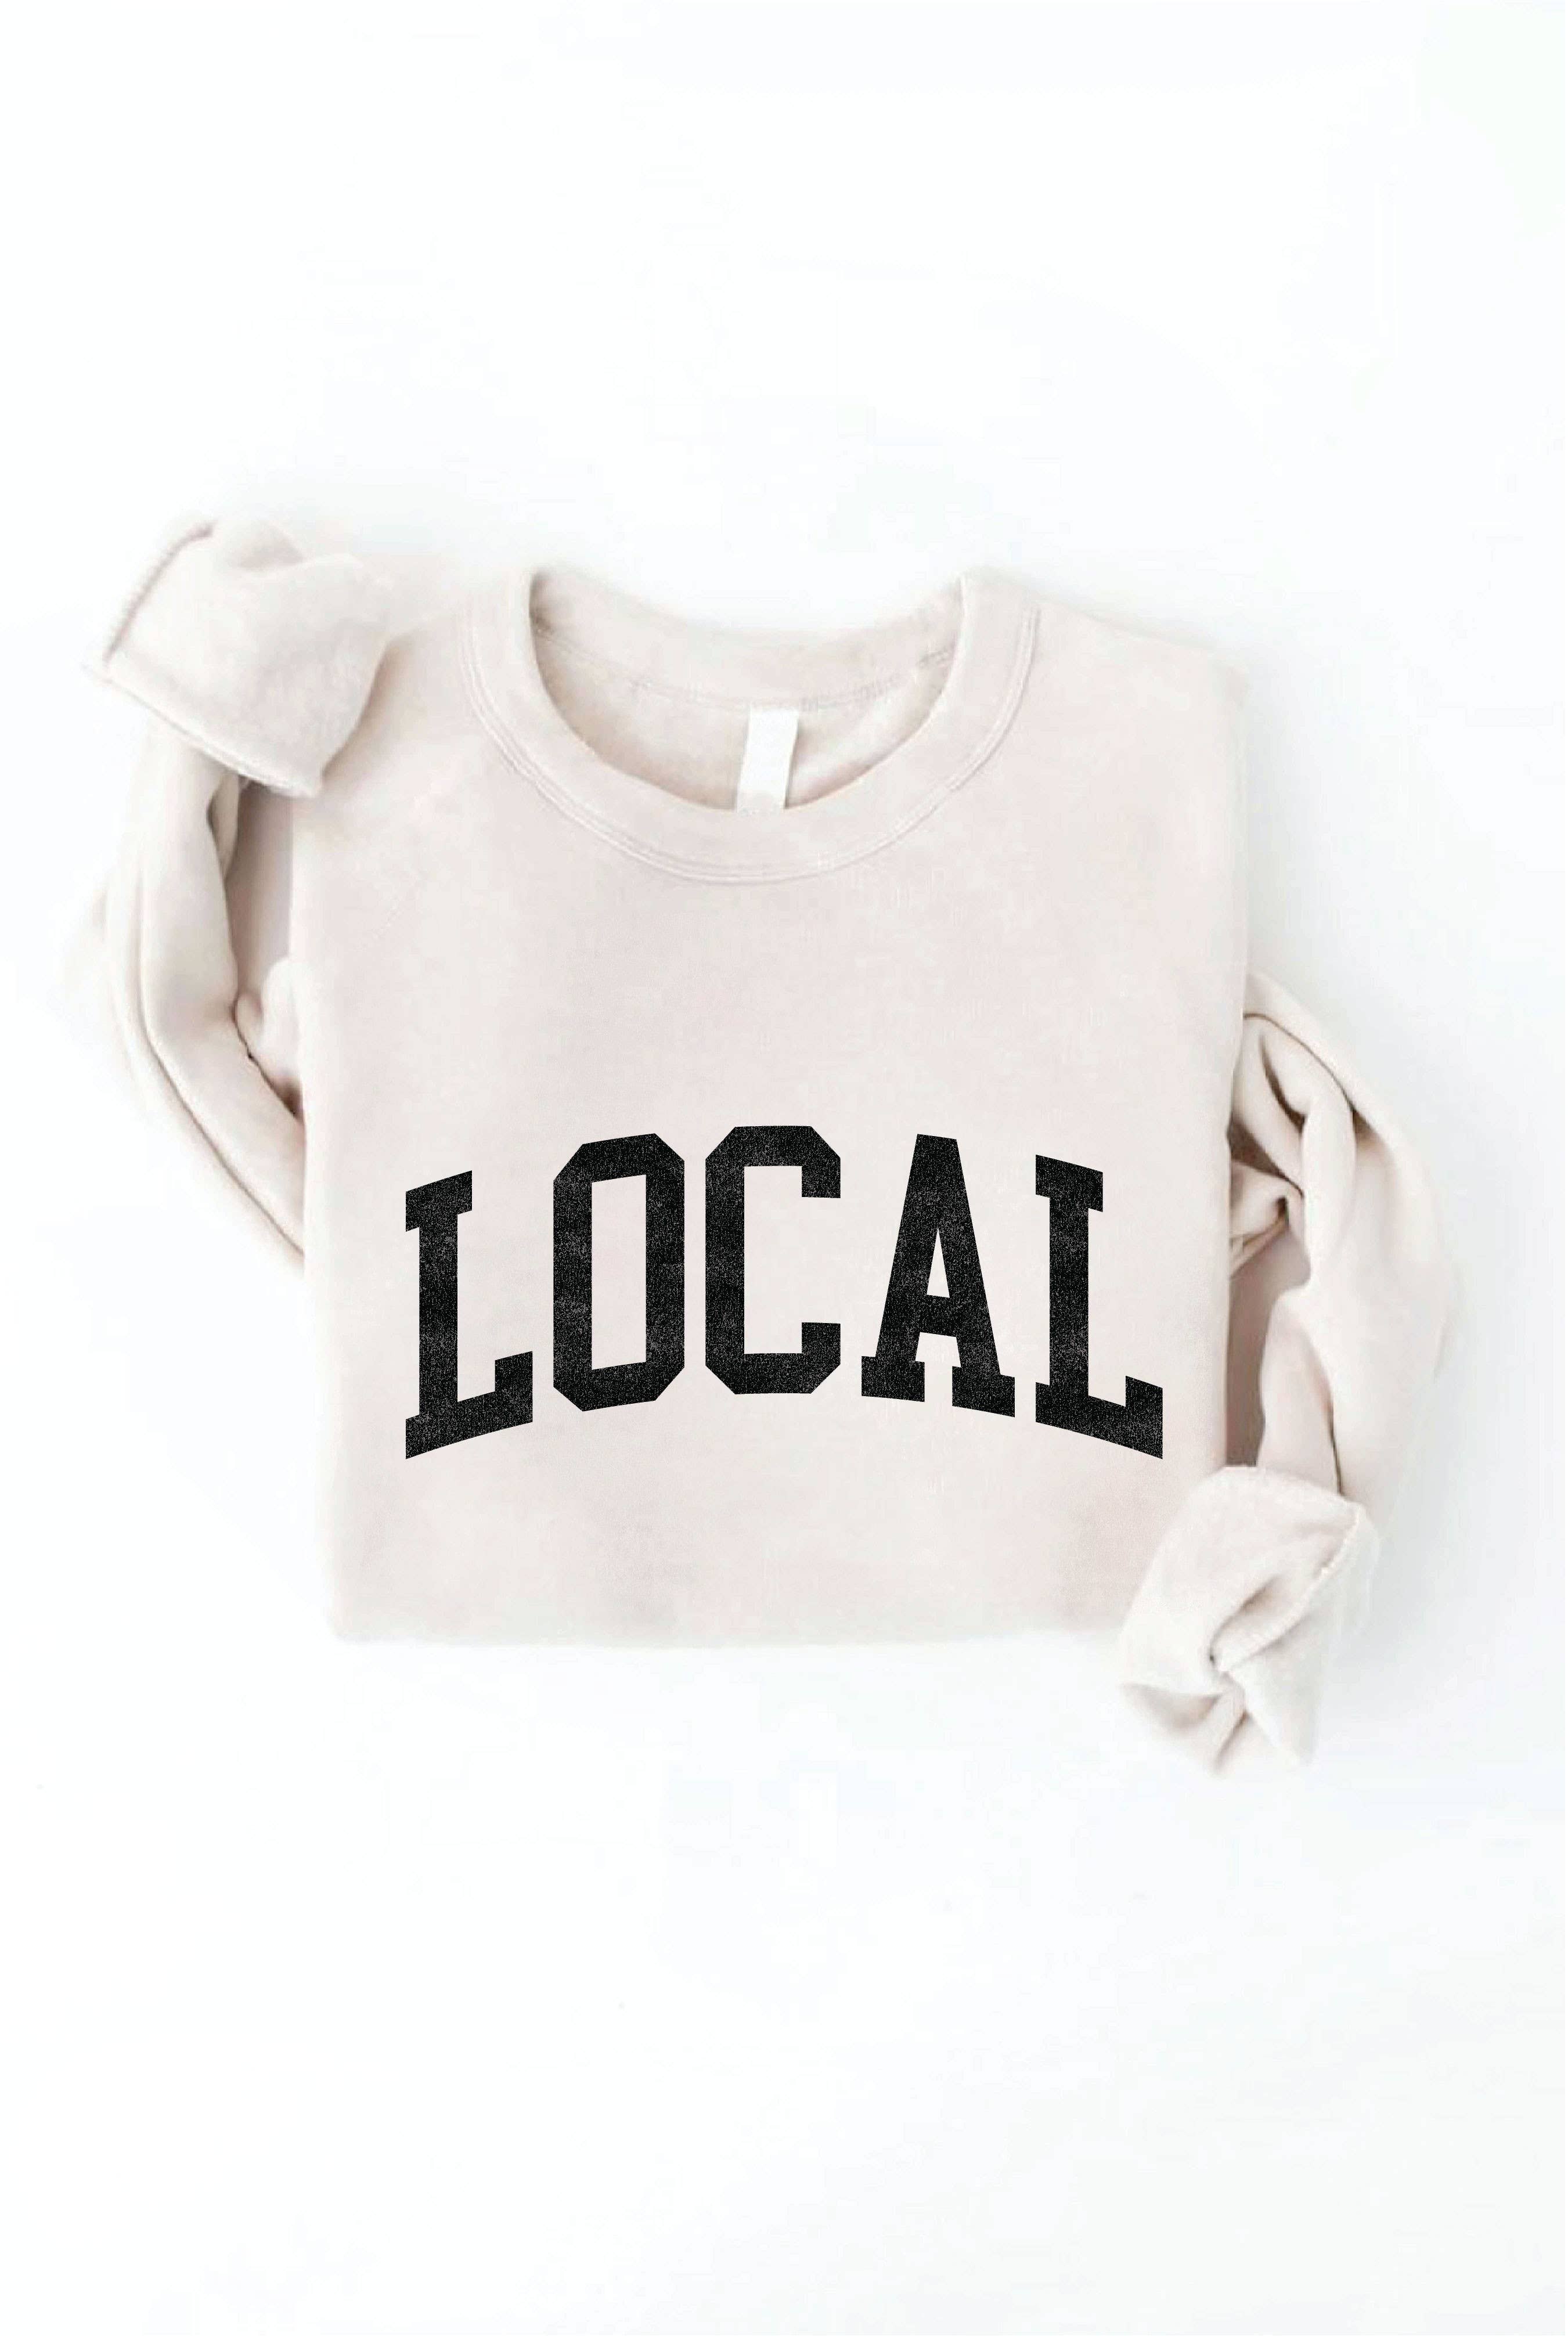 LOCAL graphic sweatshirt: M / MAUVE